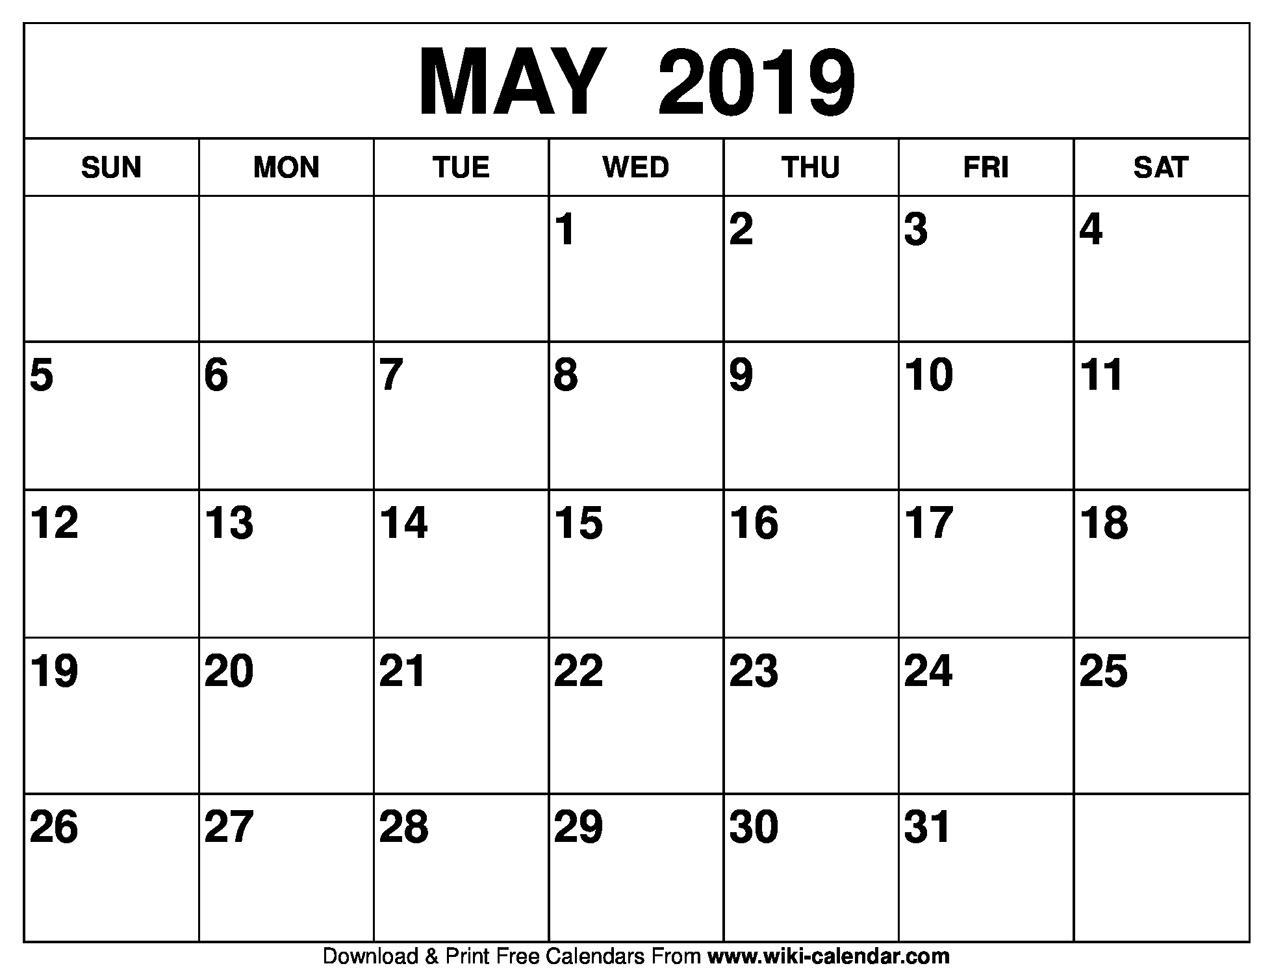 May 2019 Calendar Wallpapers Wallpaper Cave